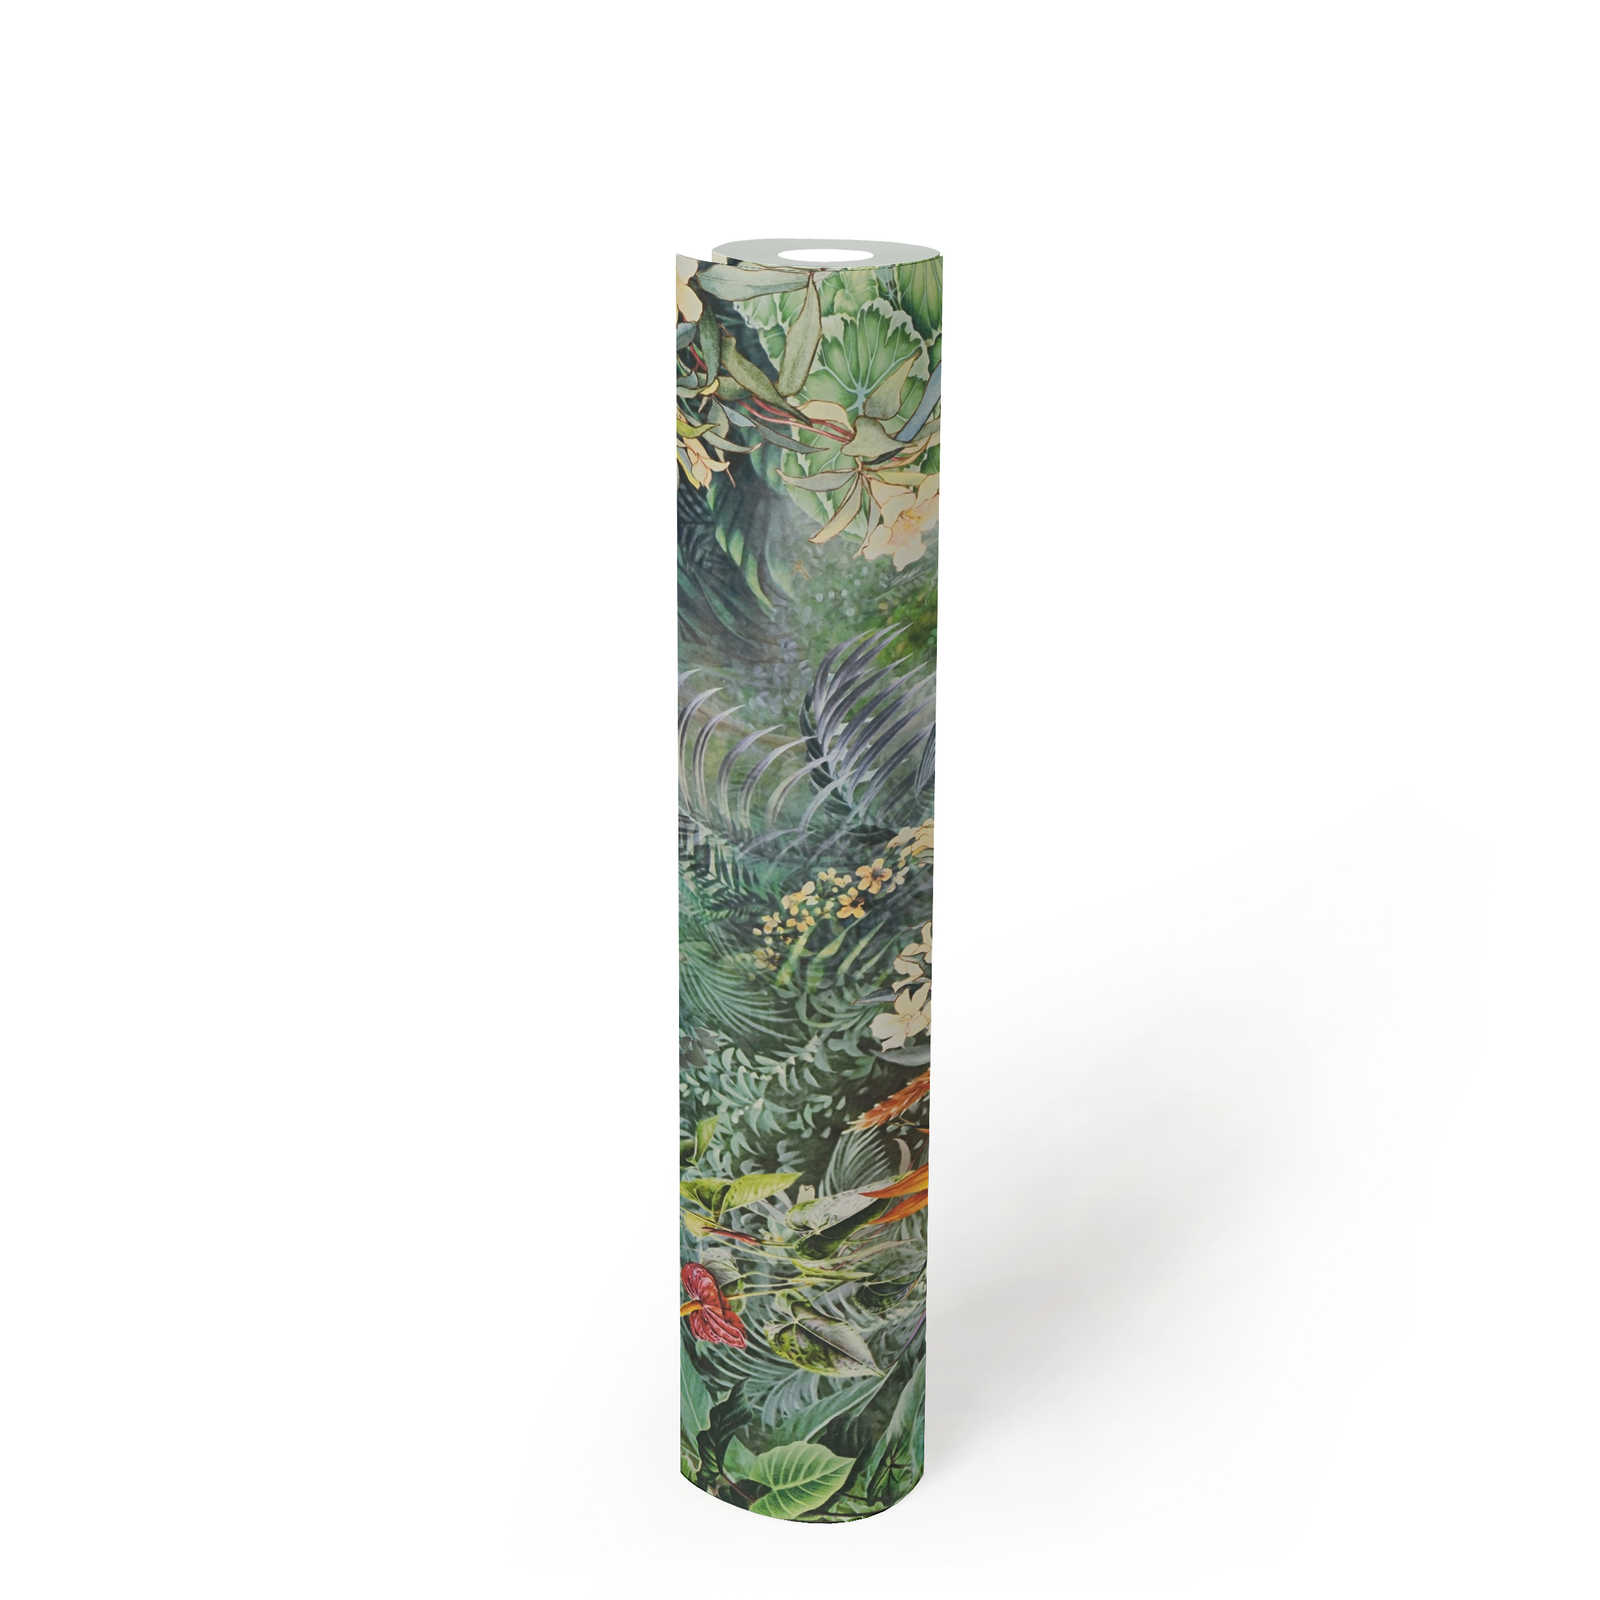             Florale Tapete Dschungel Tiere & Pflanzen – Grün, Grau
        